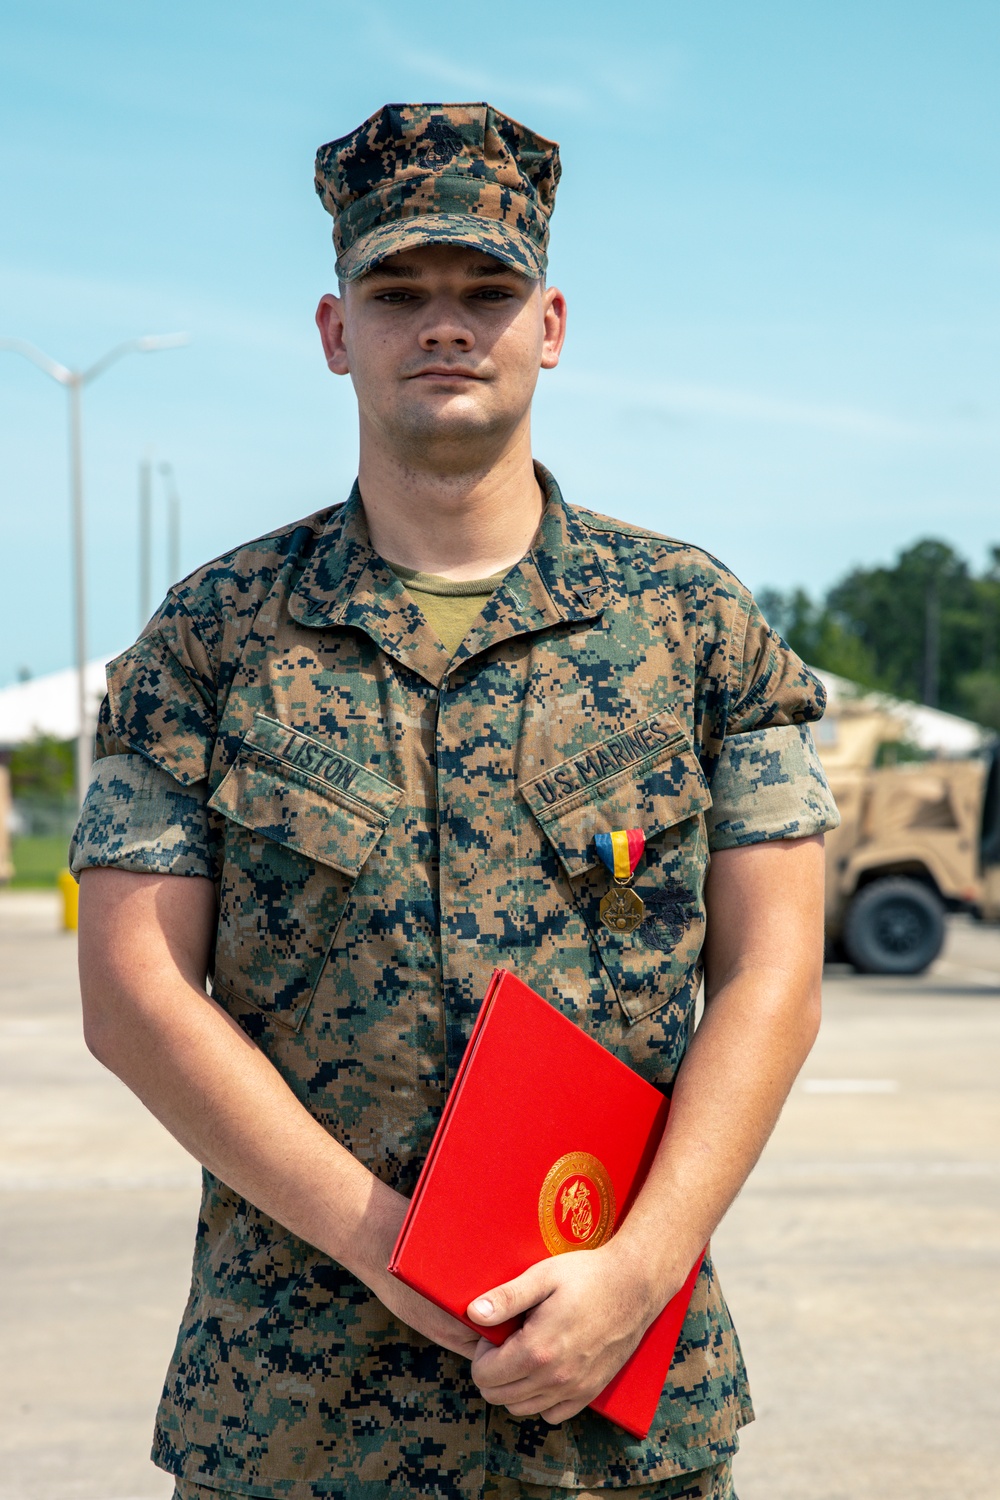 Lance Cpl. Ryan Liston awarded the Navy Marine Corps Medal